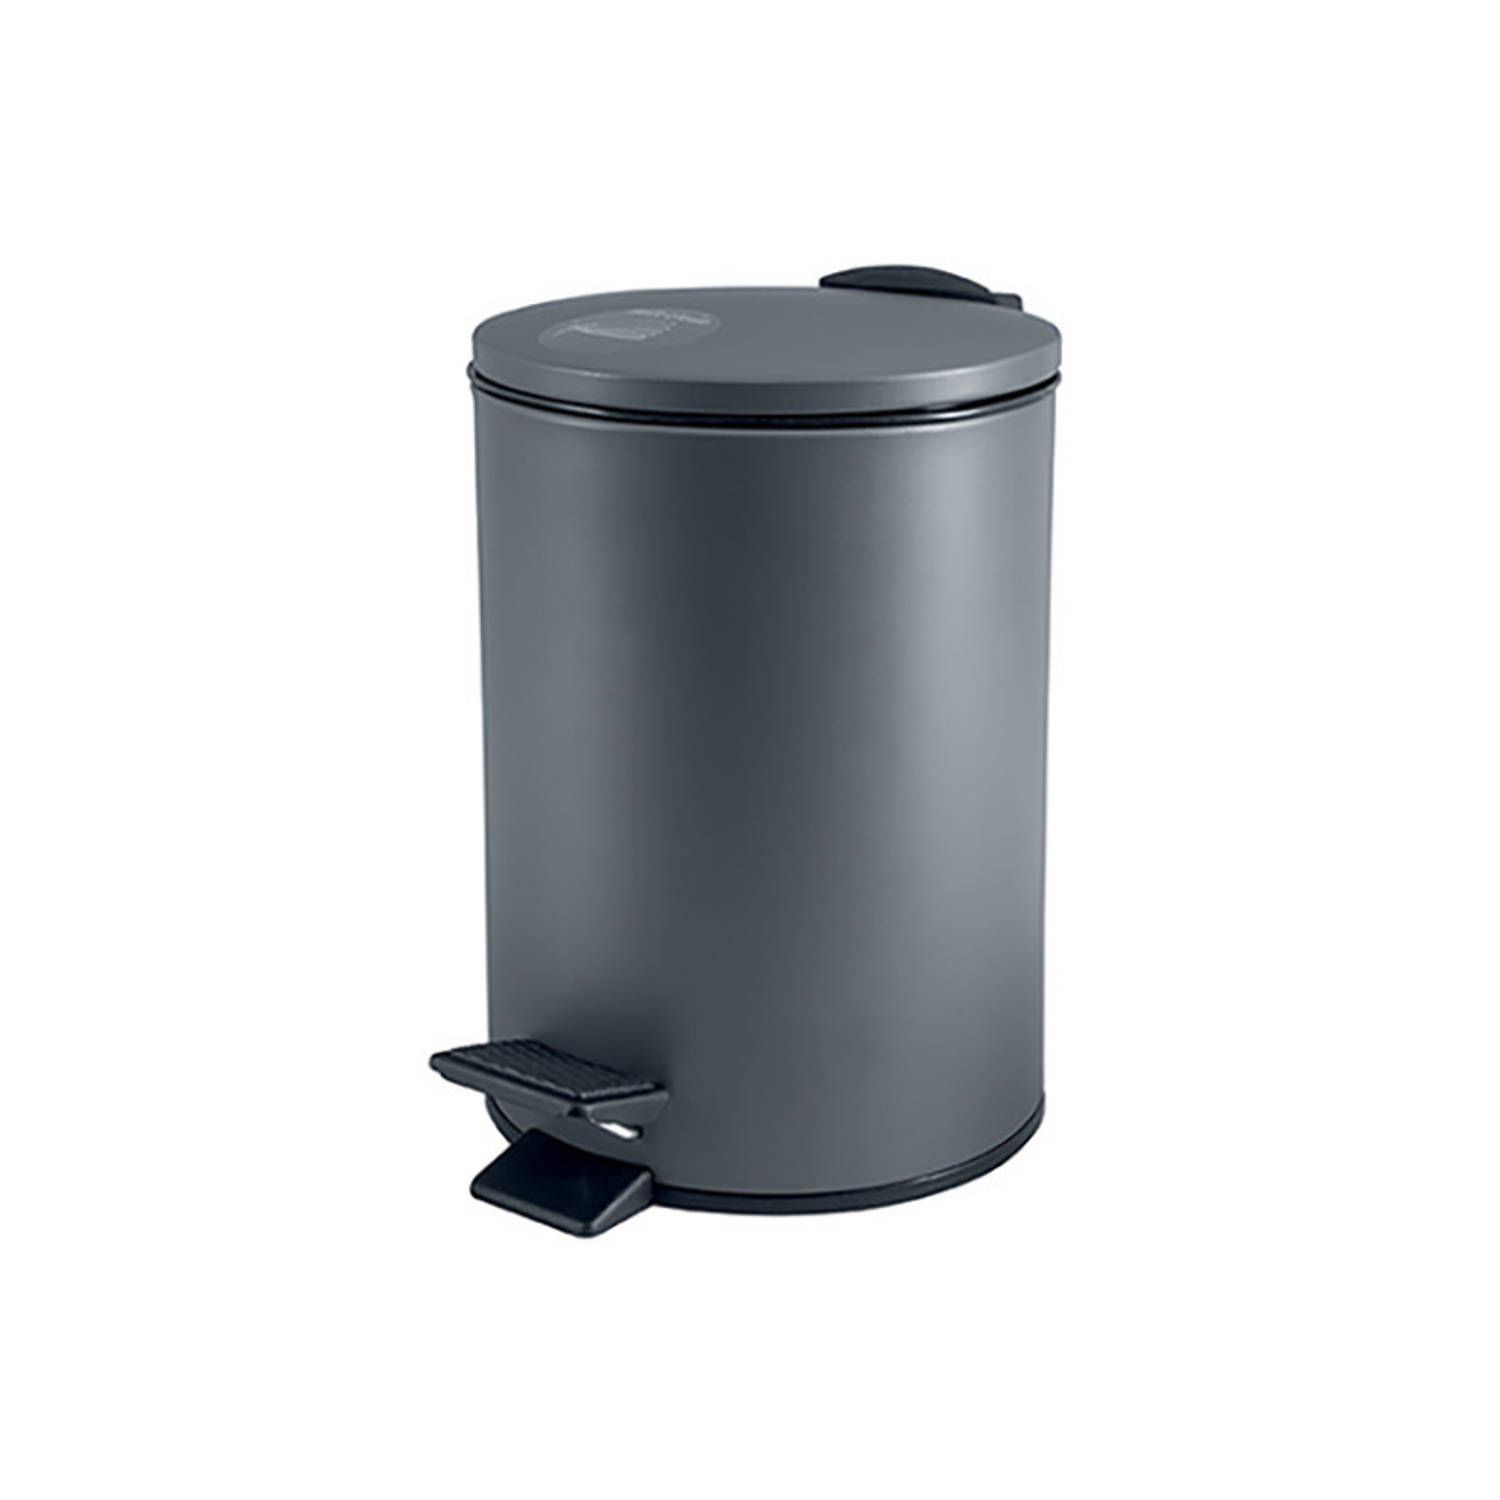 Spirella Pedaalemmer Cannes donkergrijs 3 liter metaal L17 x H25 cm soft-close toilet-badkamer Pedaa